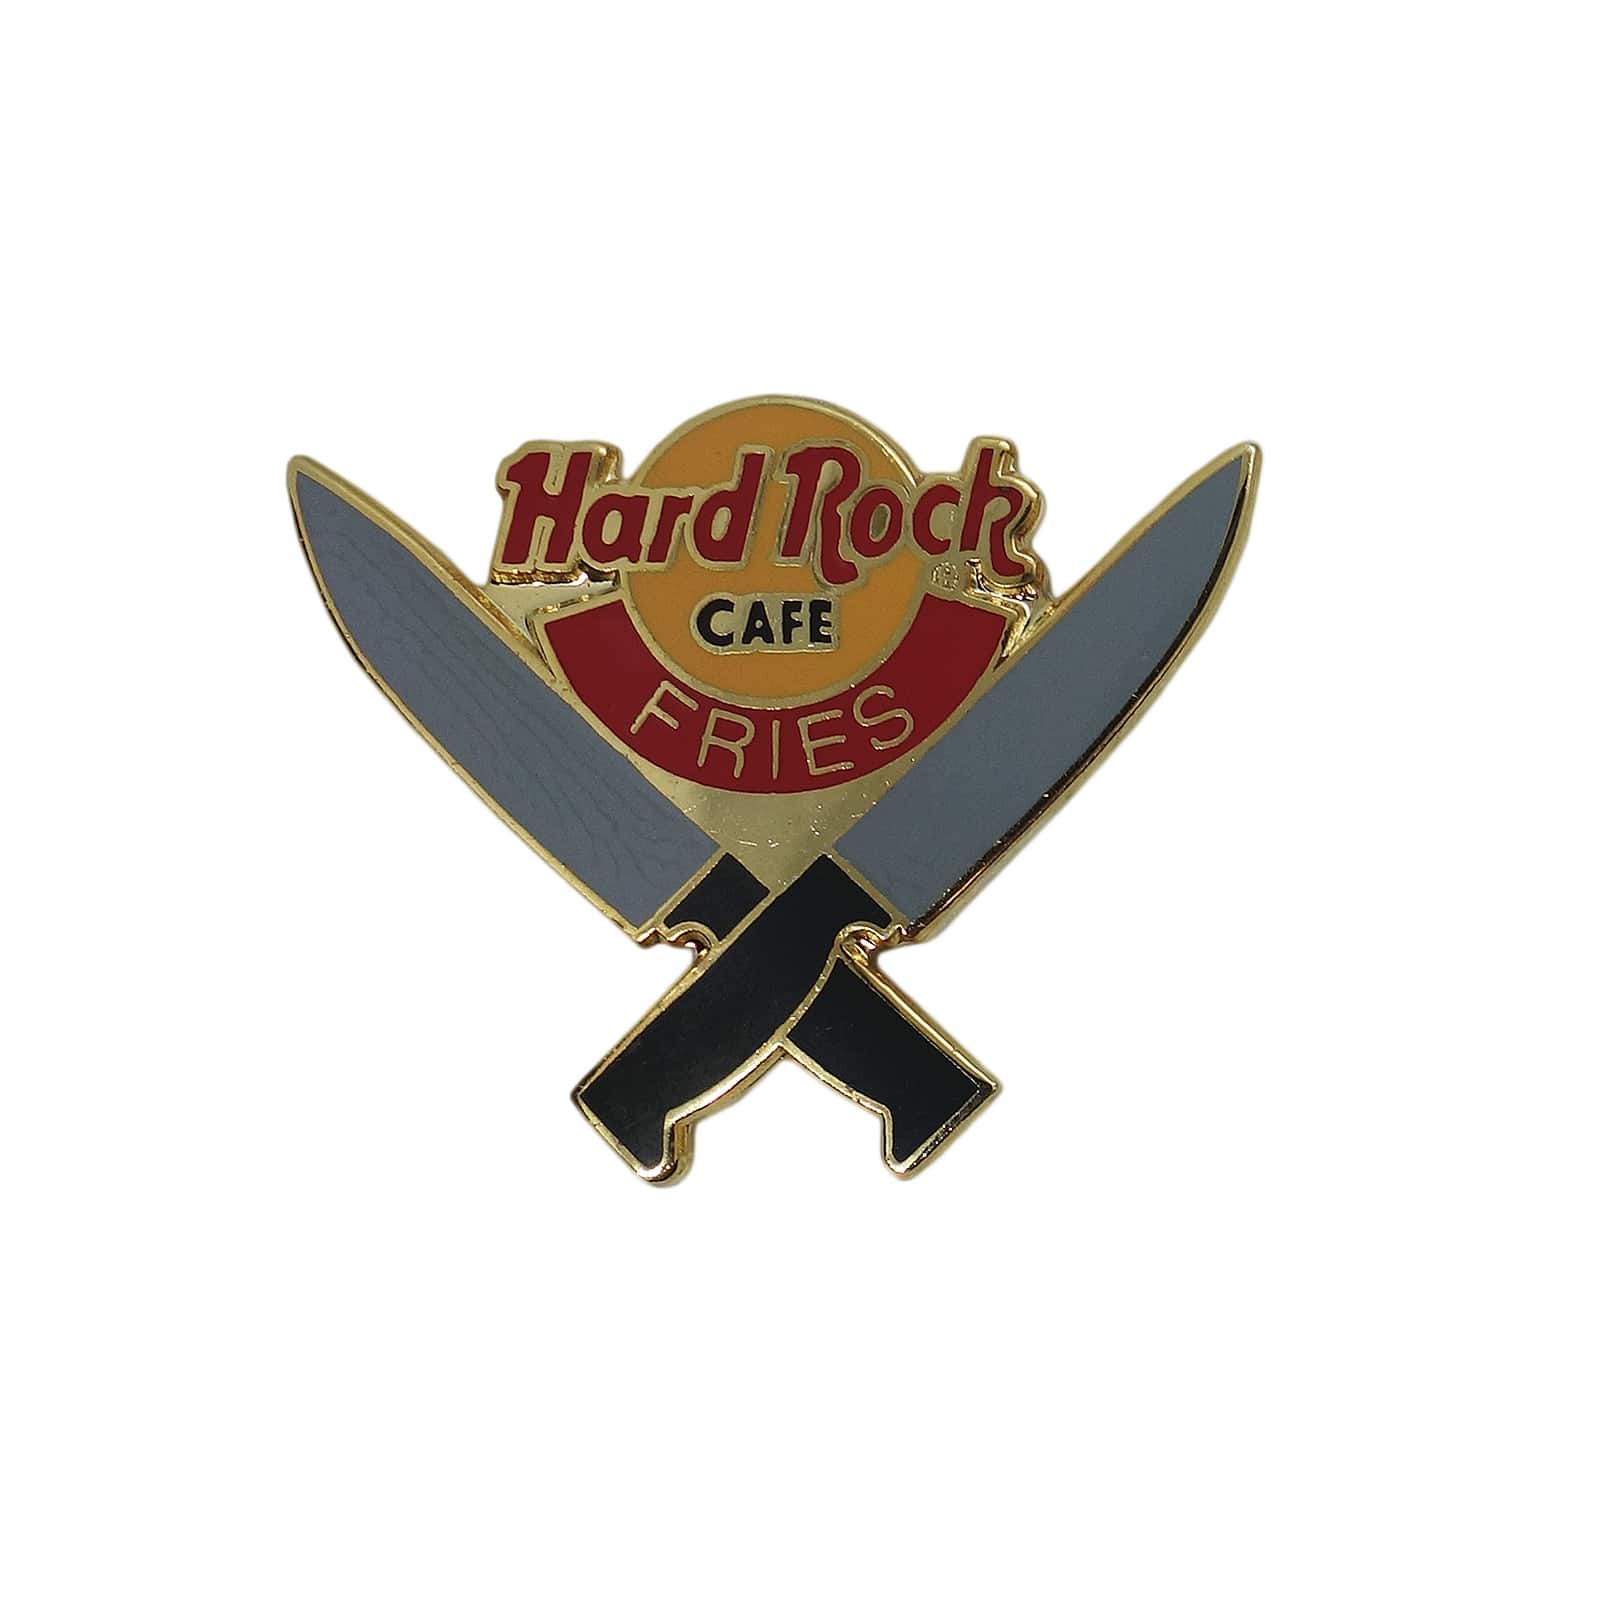 Hard Rock CAFE FRIES スタッフ ピンズ ハードロックカフェ 留め具付き